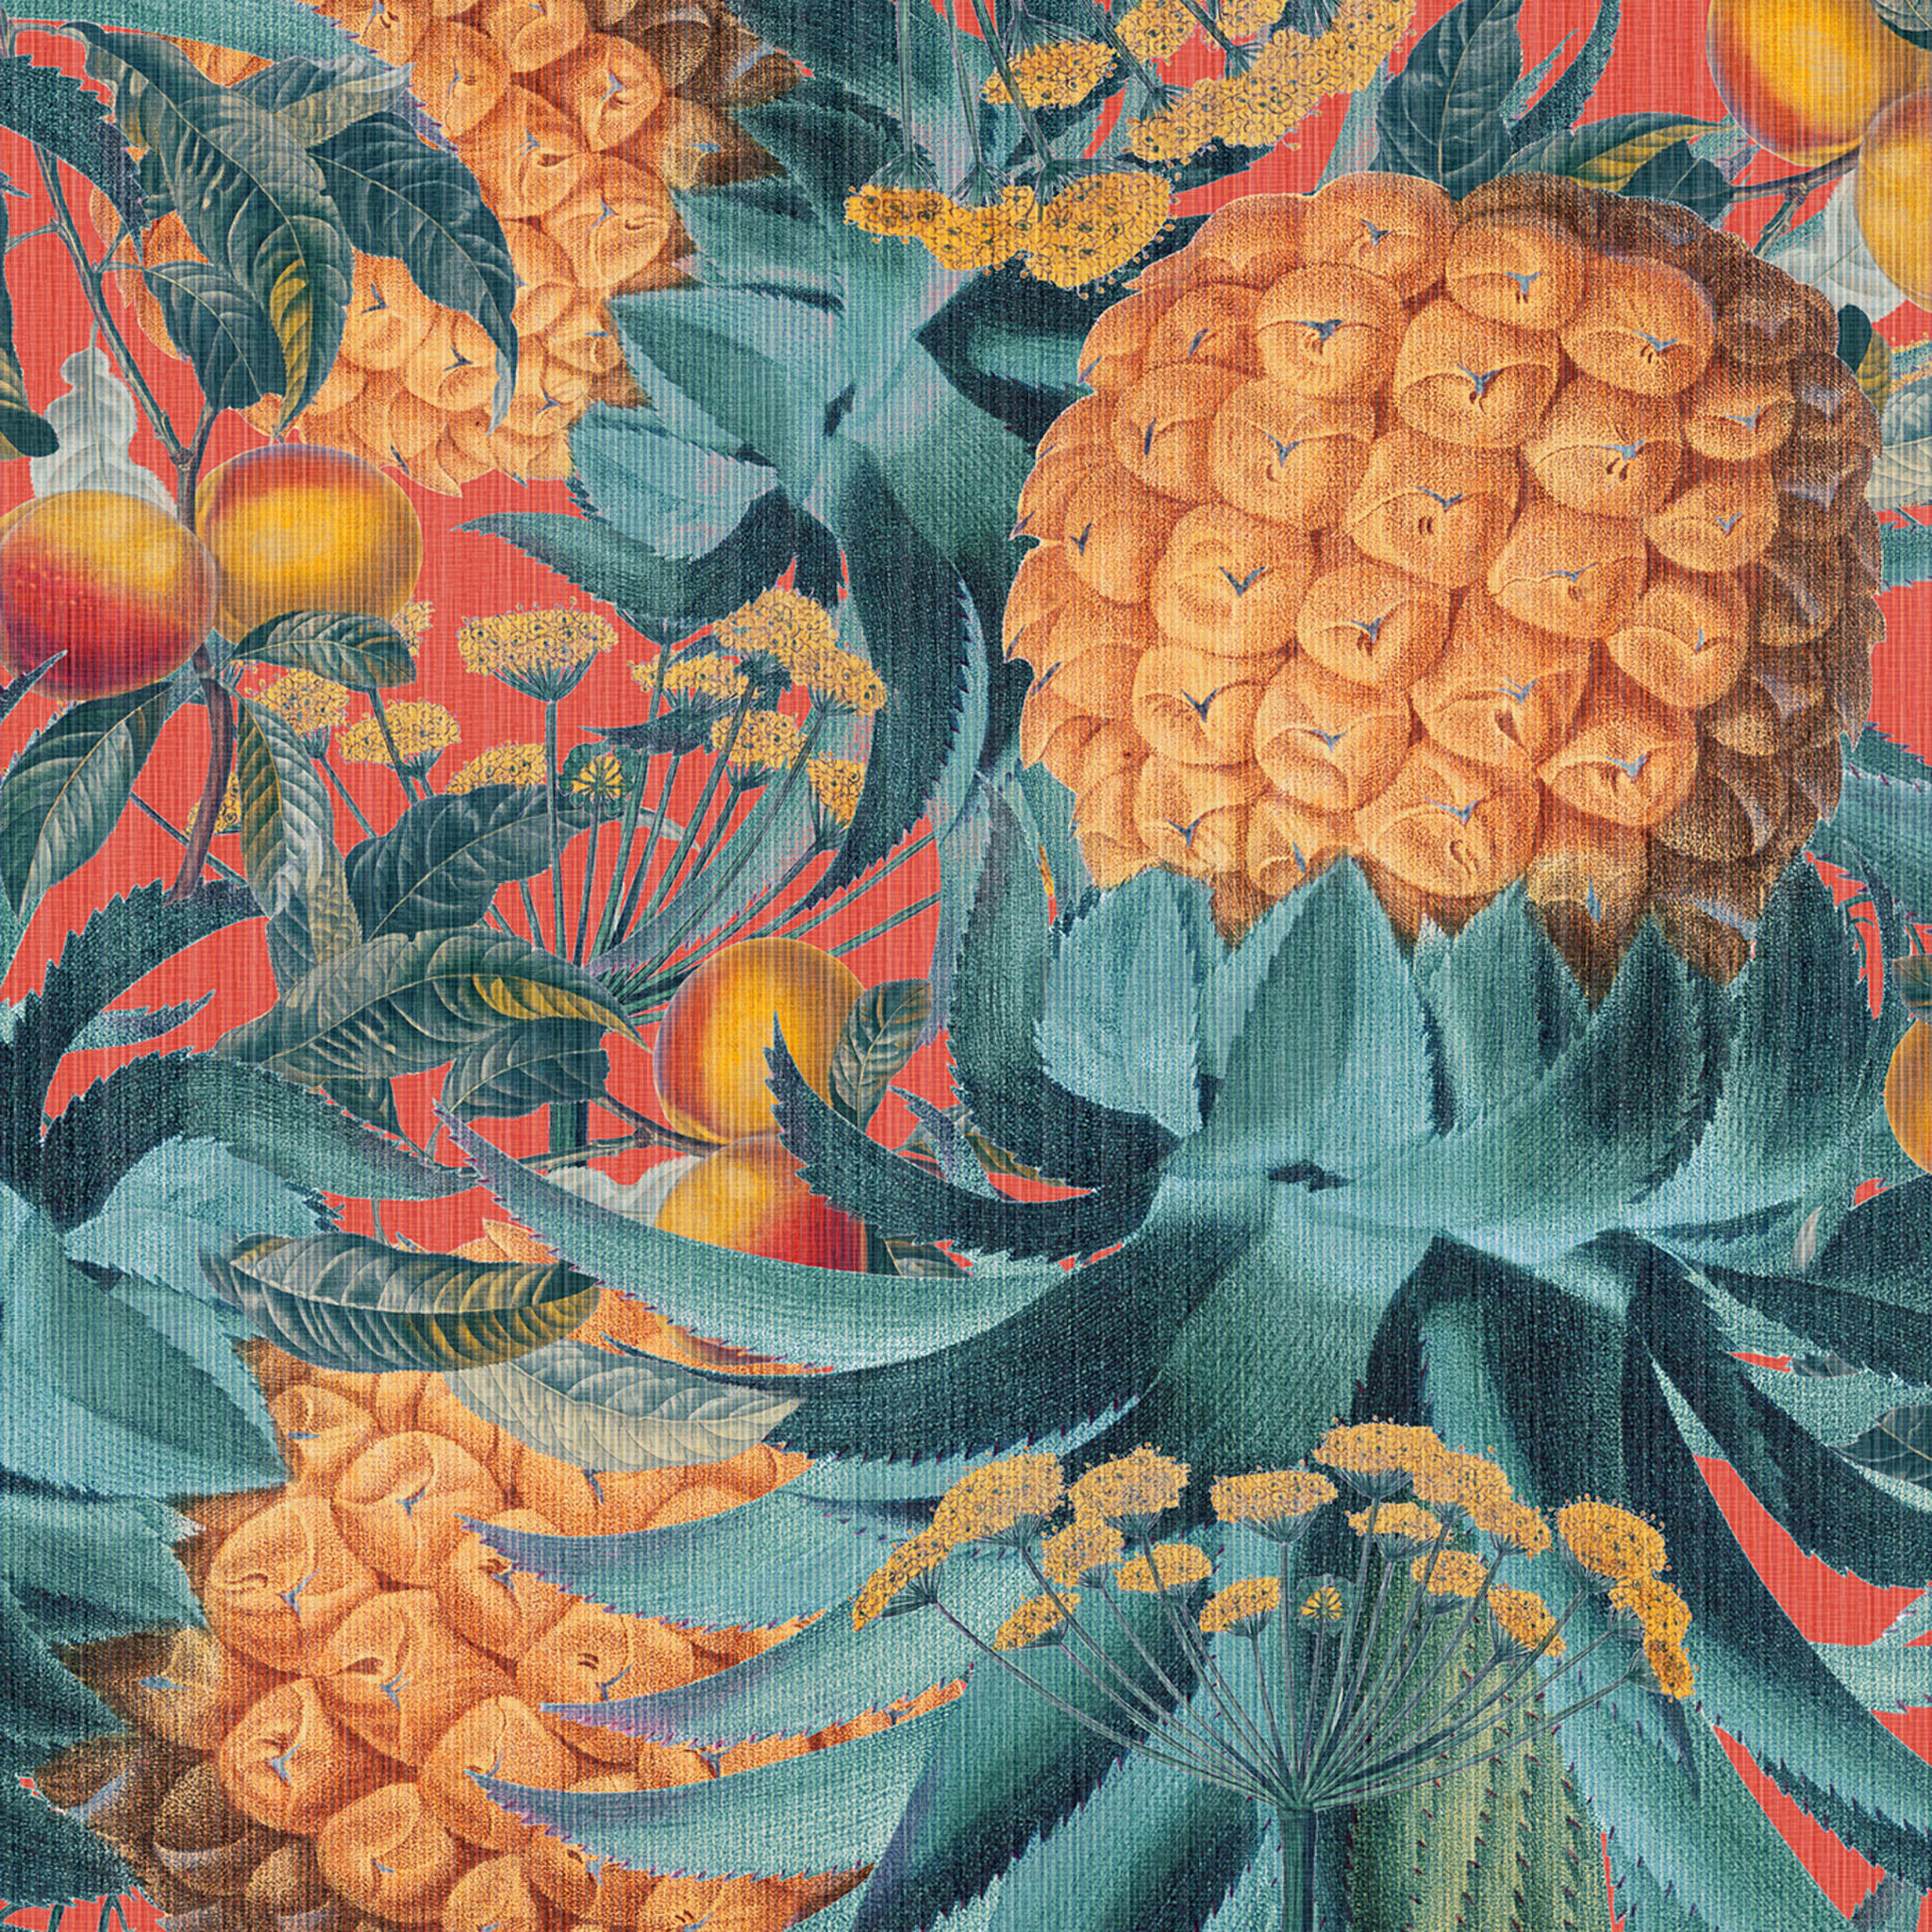 Giant Pineapple Wallpaper by Vzn Studio - Alternative view 1